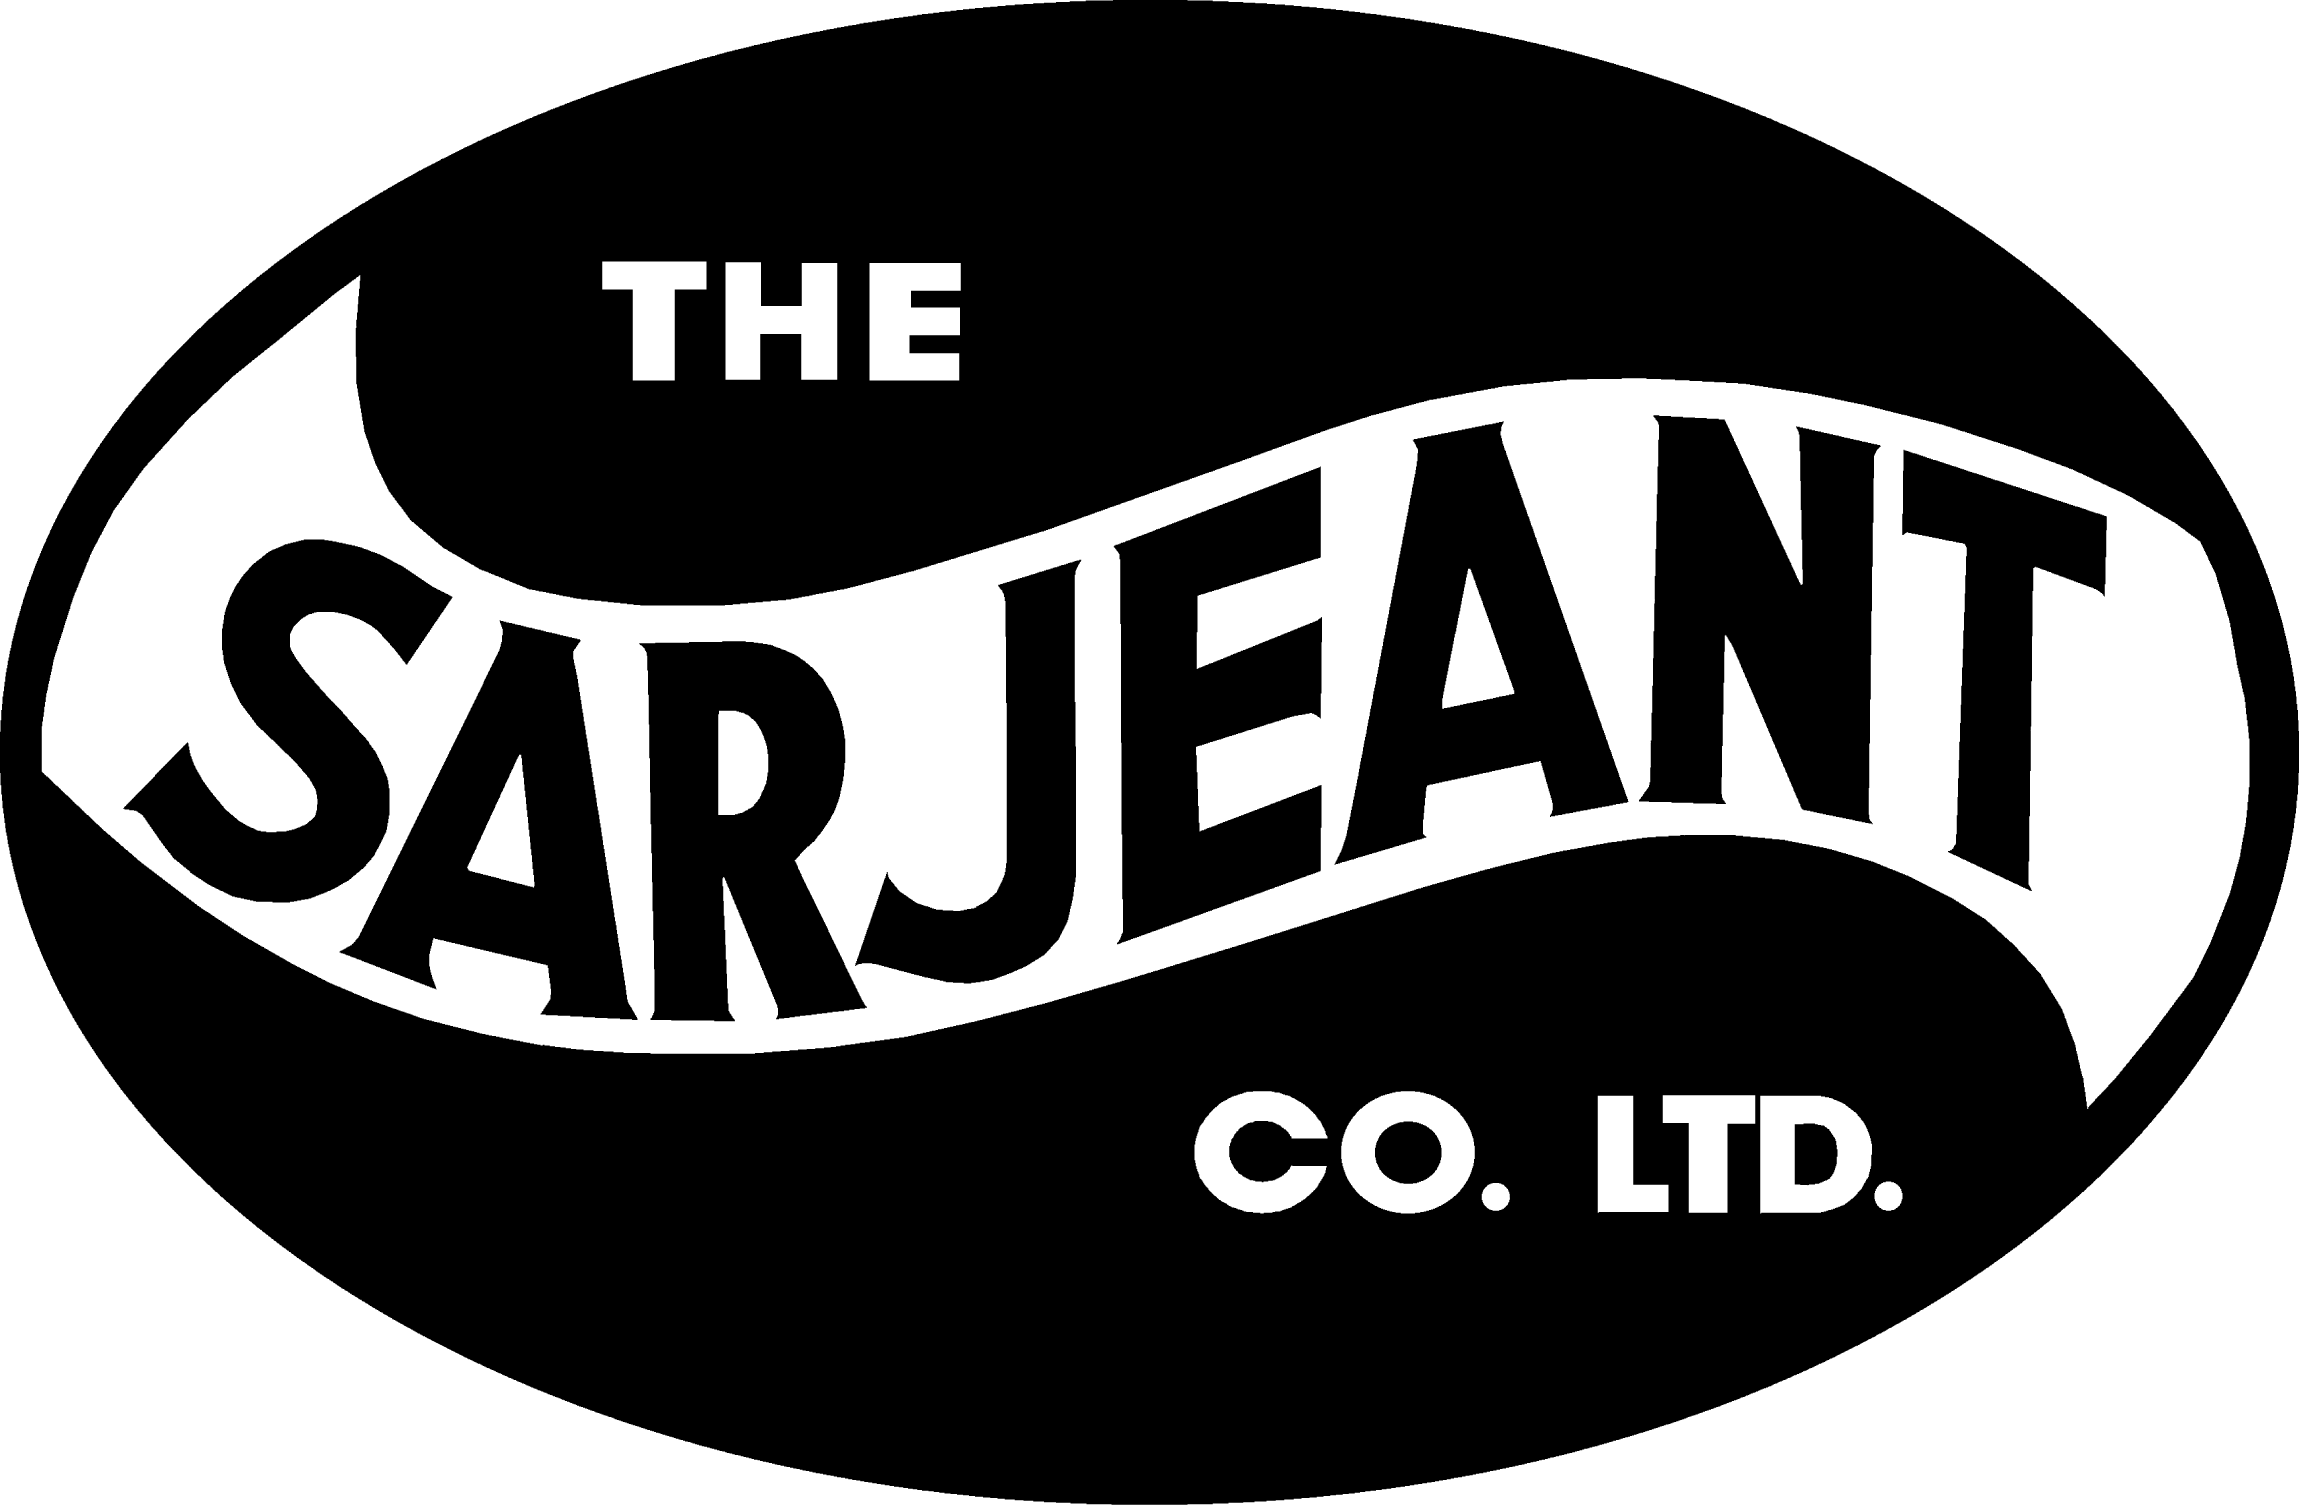 The Sarjeant Co. Ltd. logo